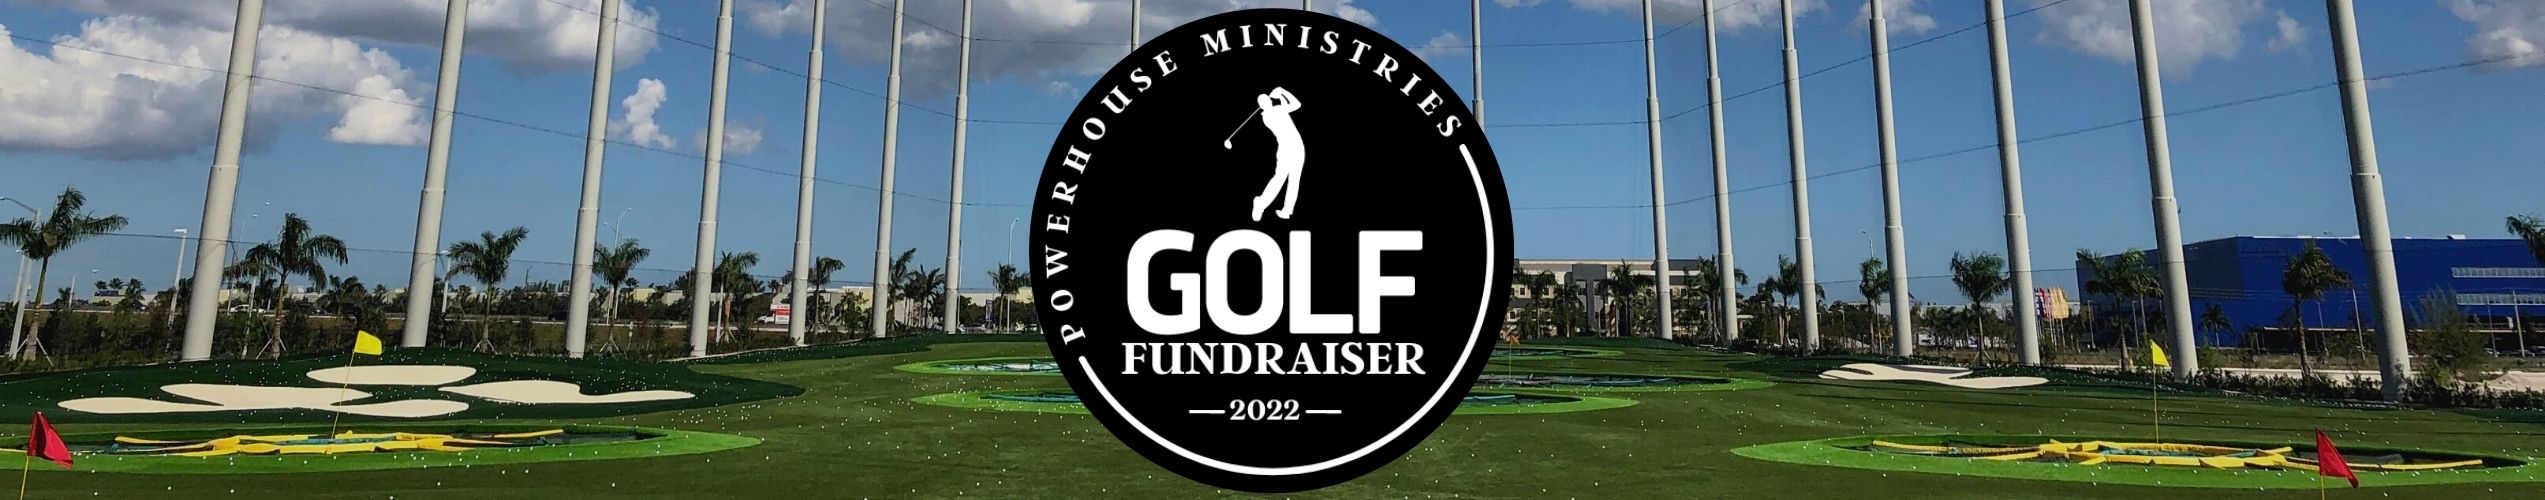 Golf Fundraiser 2022